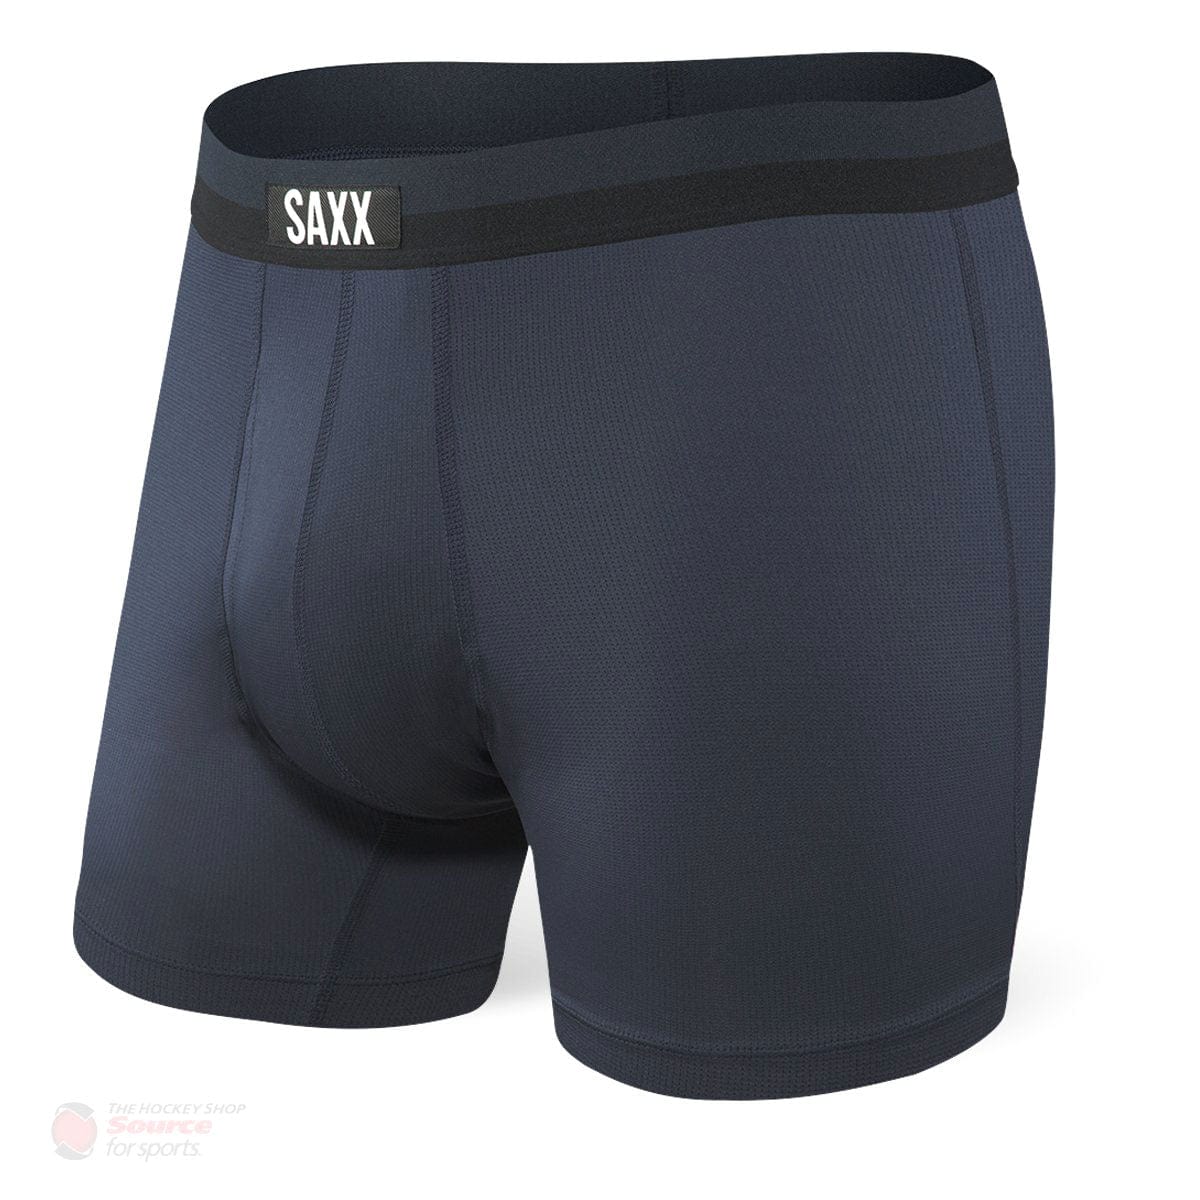 Saxx Sport Mesh Boxers - Navy